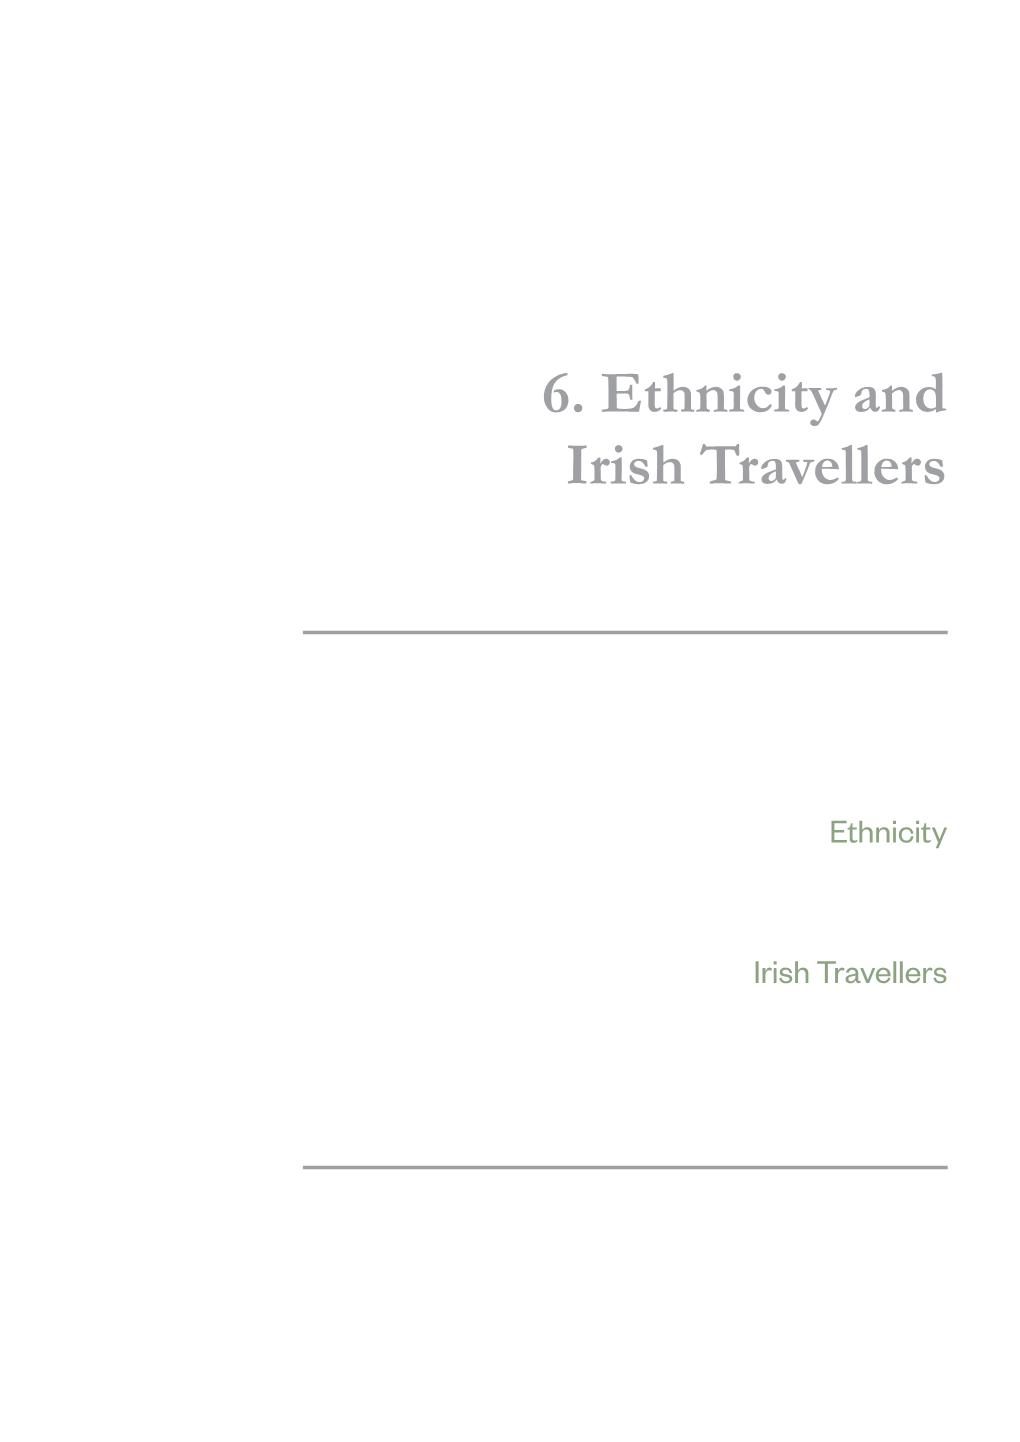 6. Ethnicity and Irish Travellers